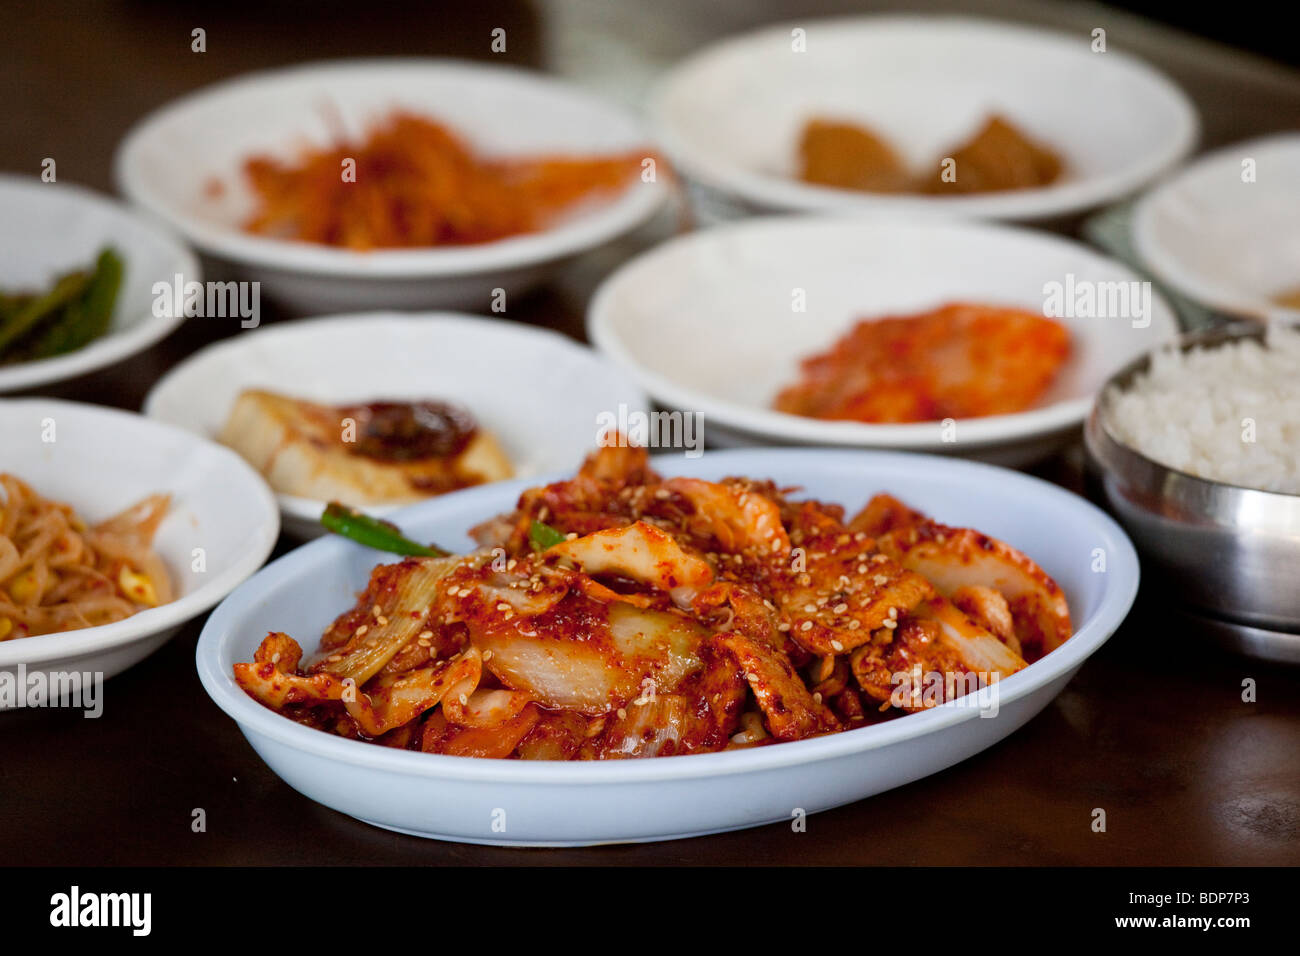 Jeyuk Bokum, Spicy Pork at a Korean Restaurant in Seoul, South Korea